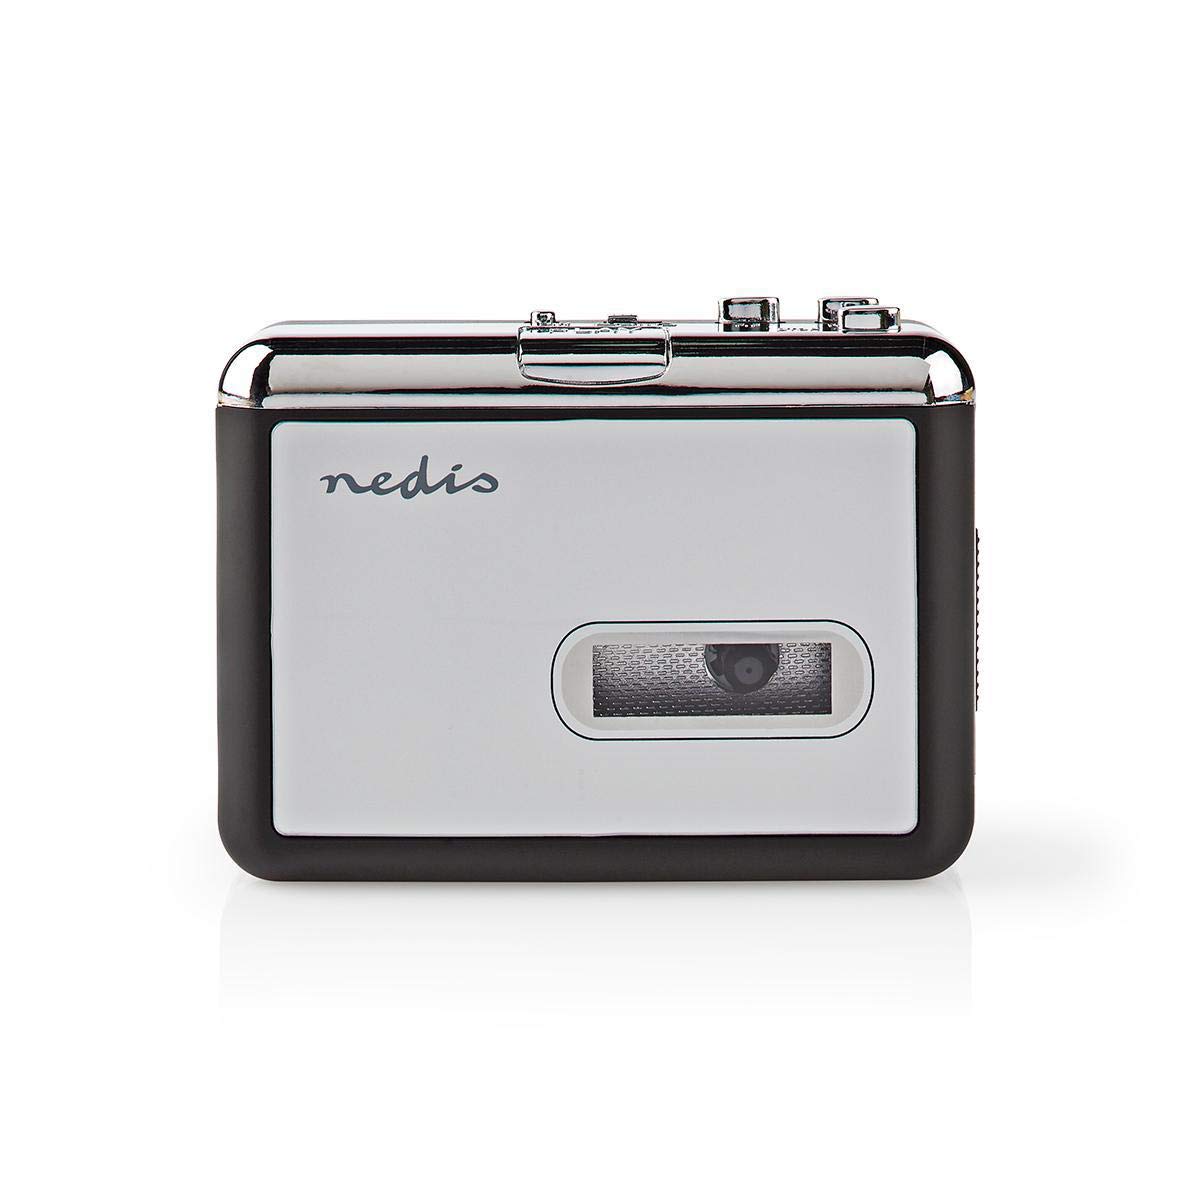 NEDIS - Tragbarer USB-Kassetten-zu-MP3-Konverter - Kassetten in MP3-Format umwandeln - Mit USB-Kabel und Software - 2X AA/LR6, ACGRU100GY, grau